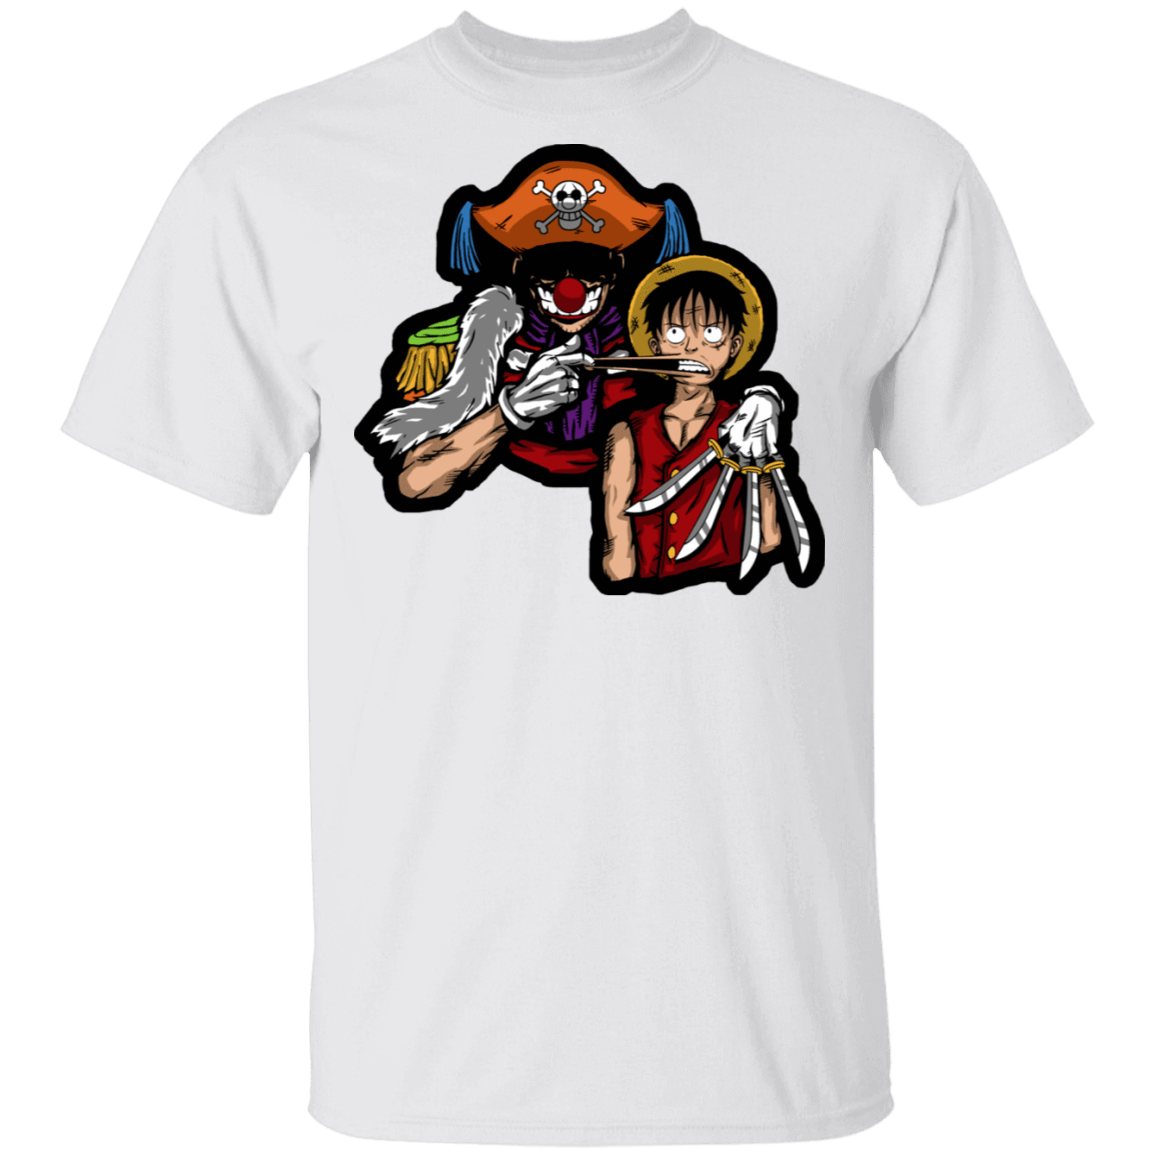 T-Shirts White / S Pirate Clown T-Shirt